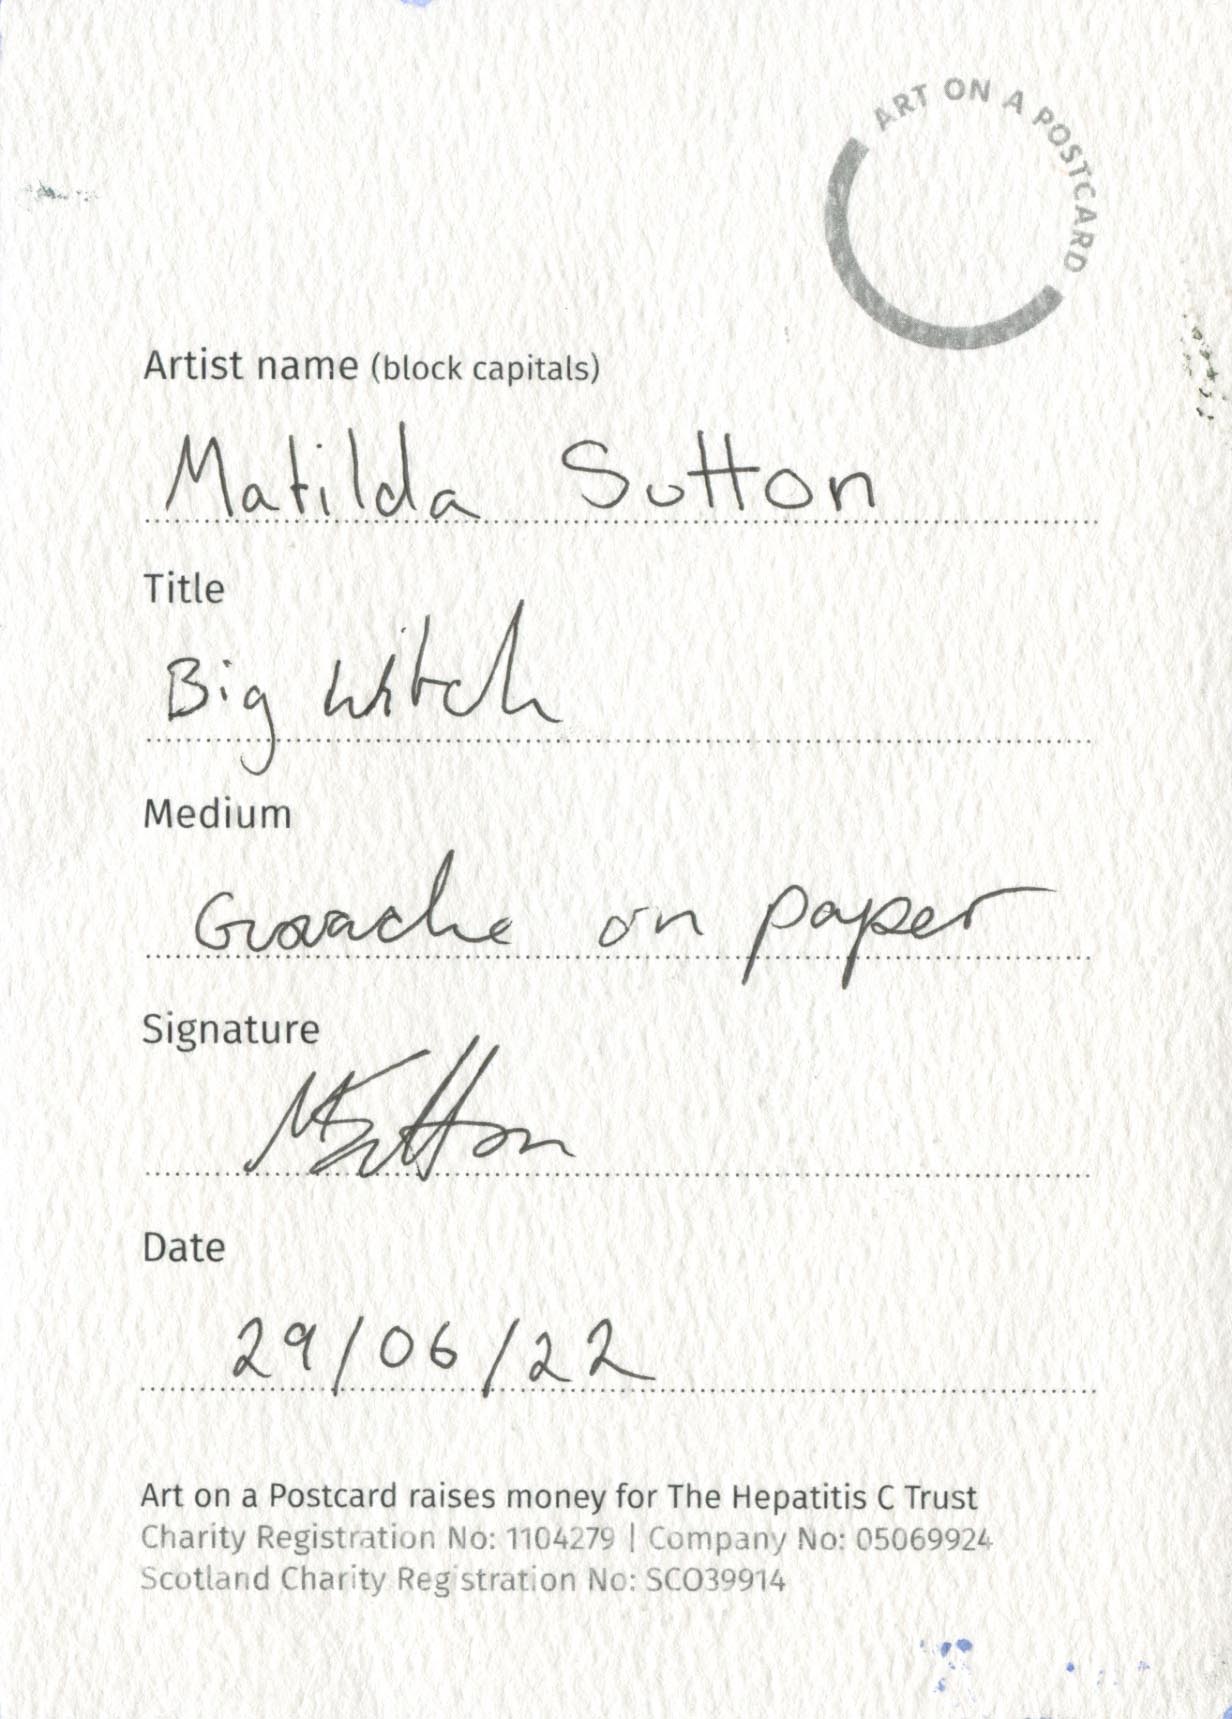 21. Matilda Sutton - Big Witch - BACK